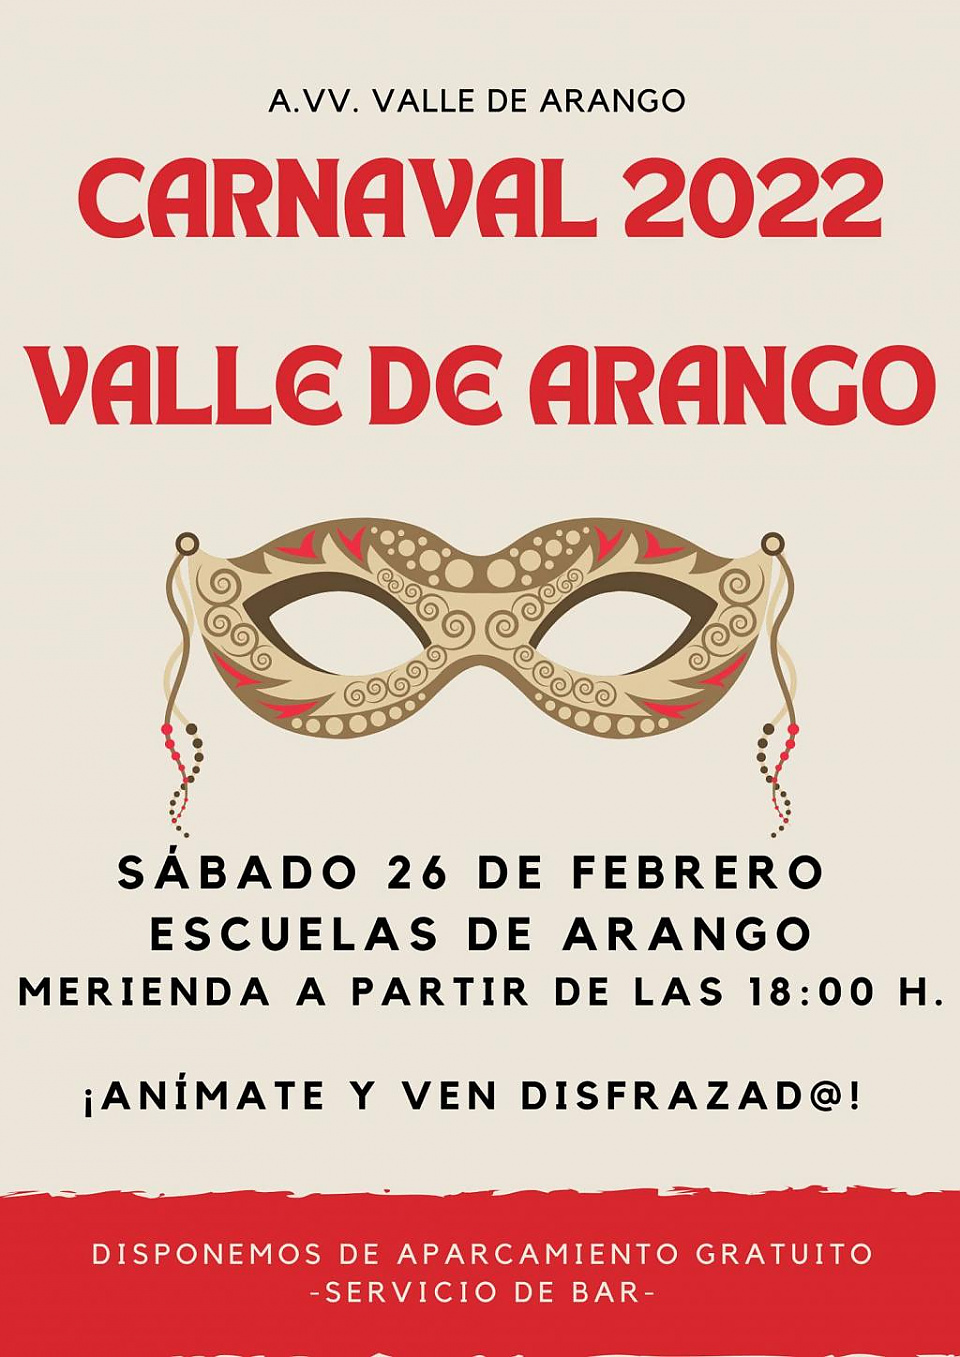 Carnaval 2022 Valle de Arango